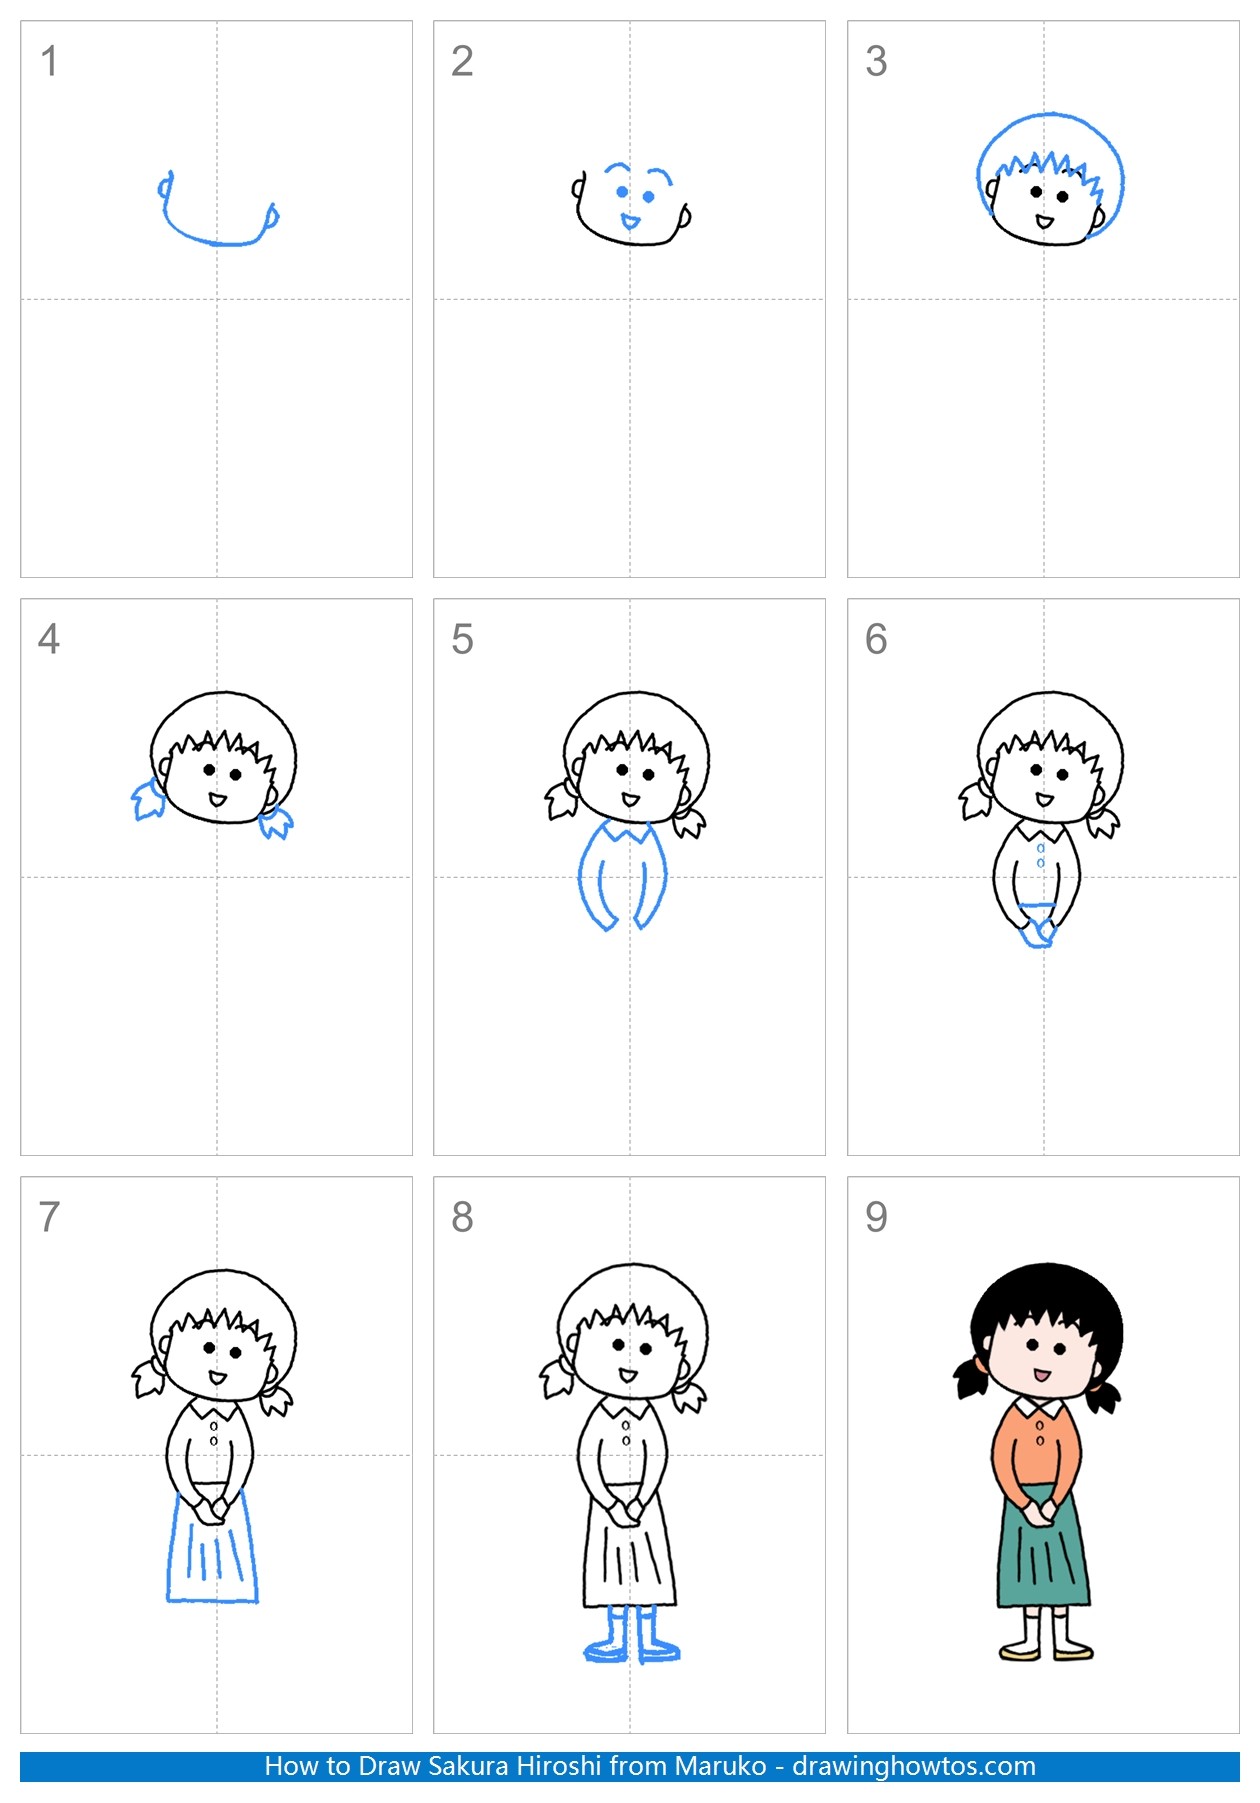 How to Draw Sakiko Sakura Step by Step